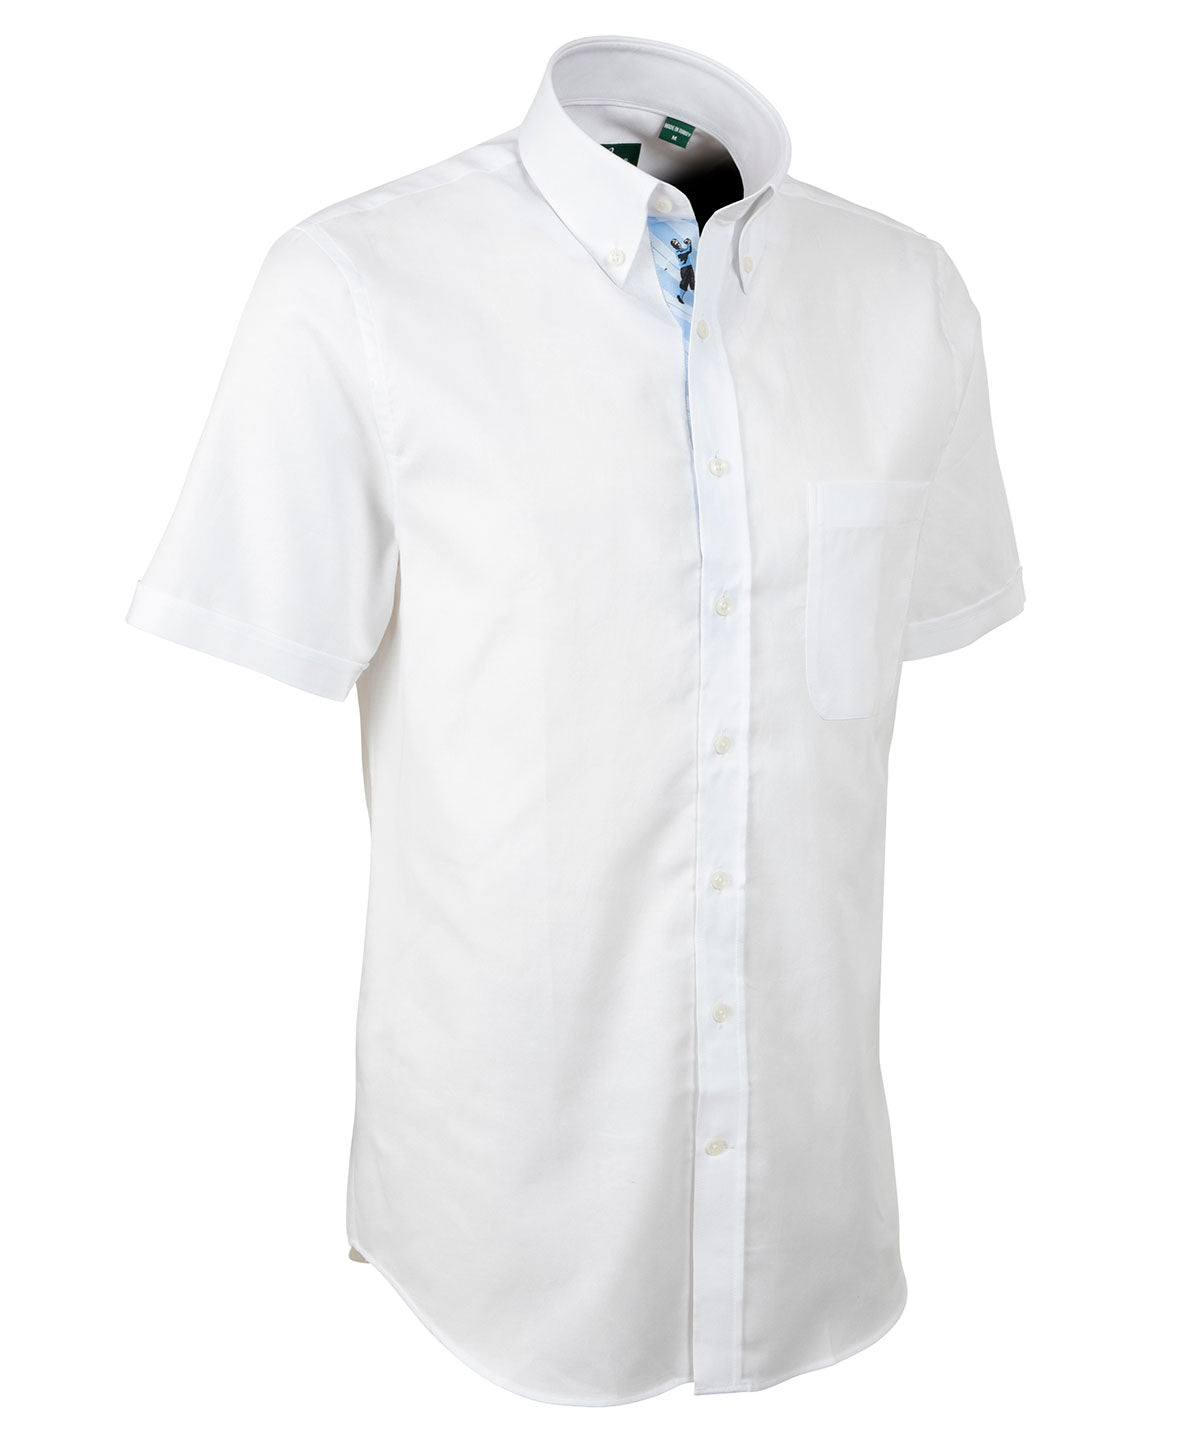 Signature 100% Cotton Oxford Button-Down Short Sleeve Shirt